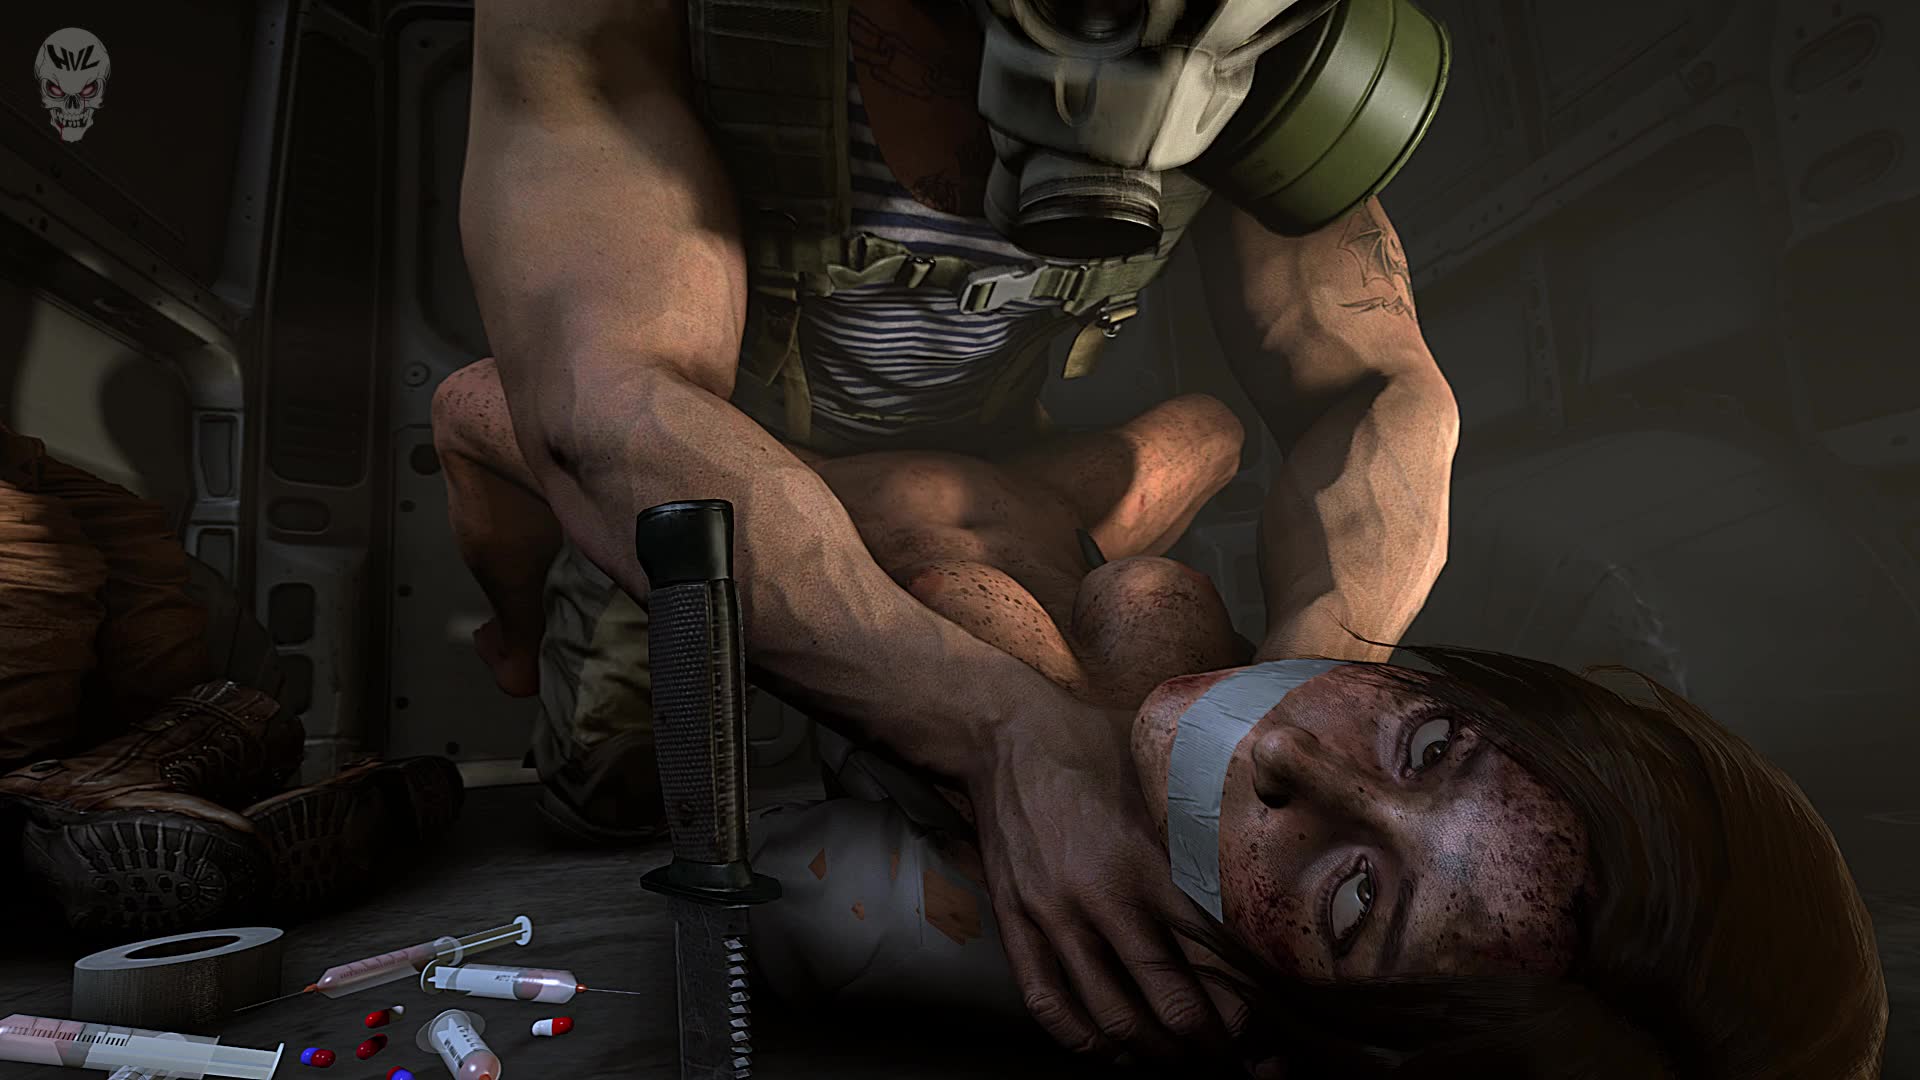 J-12 raped Lara Croft – C.O.D. NSFW animation thumbnail